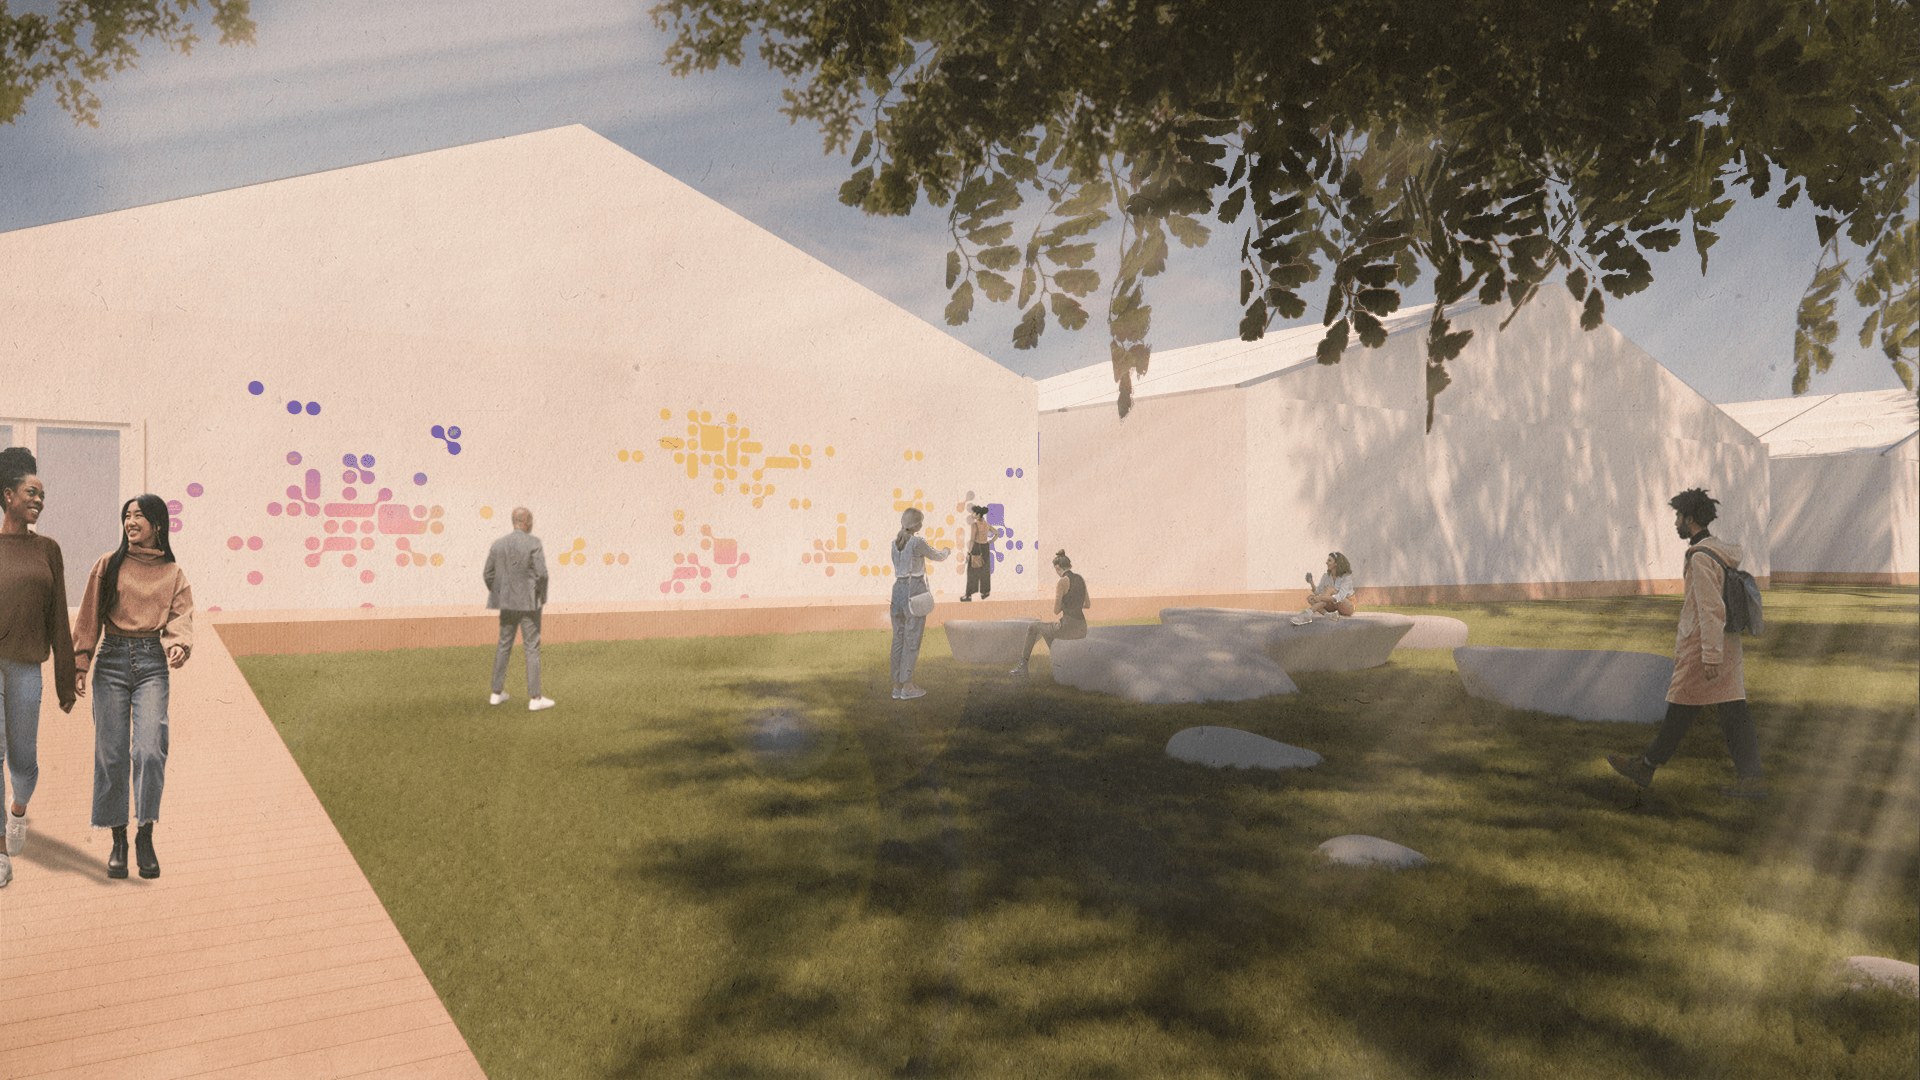 2022 Newcomb Quad Pavilion Design Competition Winner: MELT
Designed by: Chelsea Kilgore, Jose Varela Castillo, and James Poche